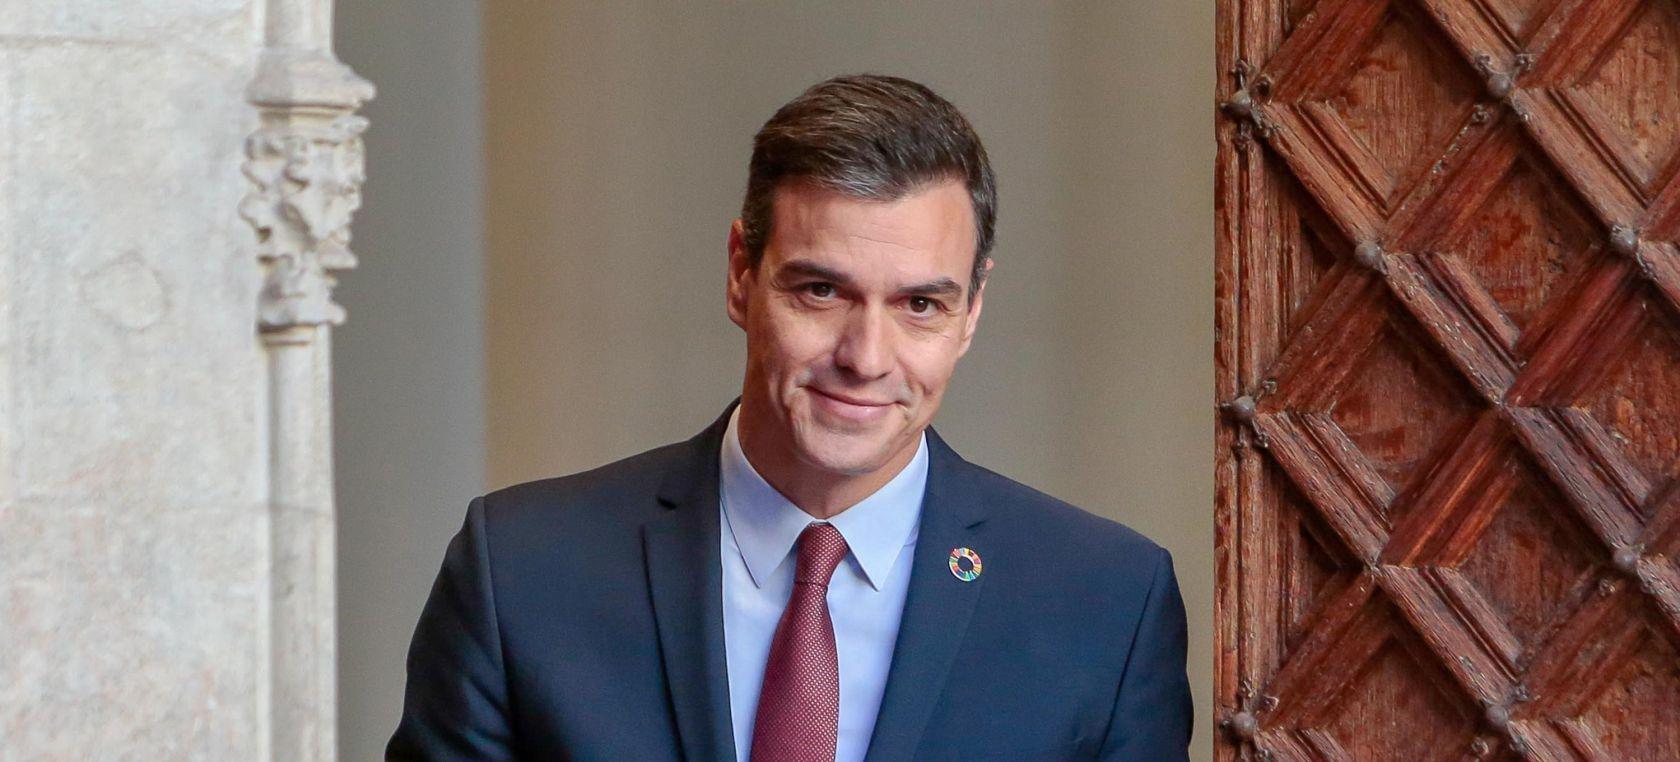 Pedro Saacutenchez Presidente de Espantildea se contagioacute de coronavirus